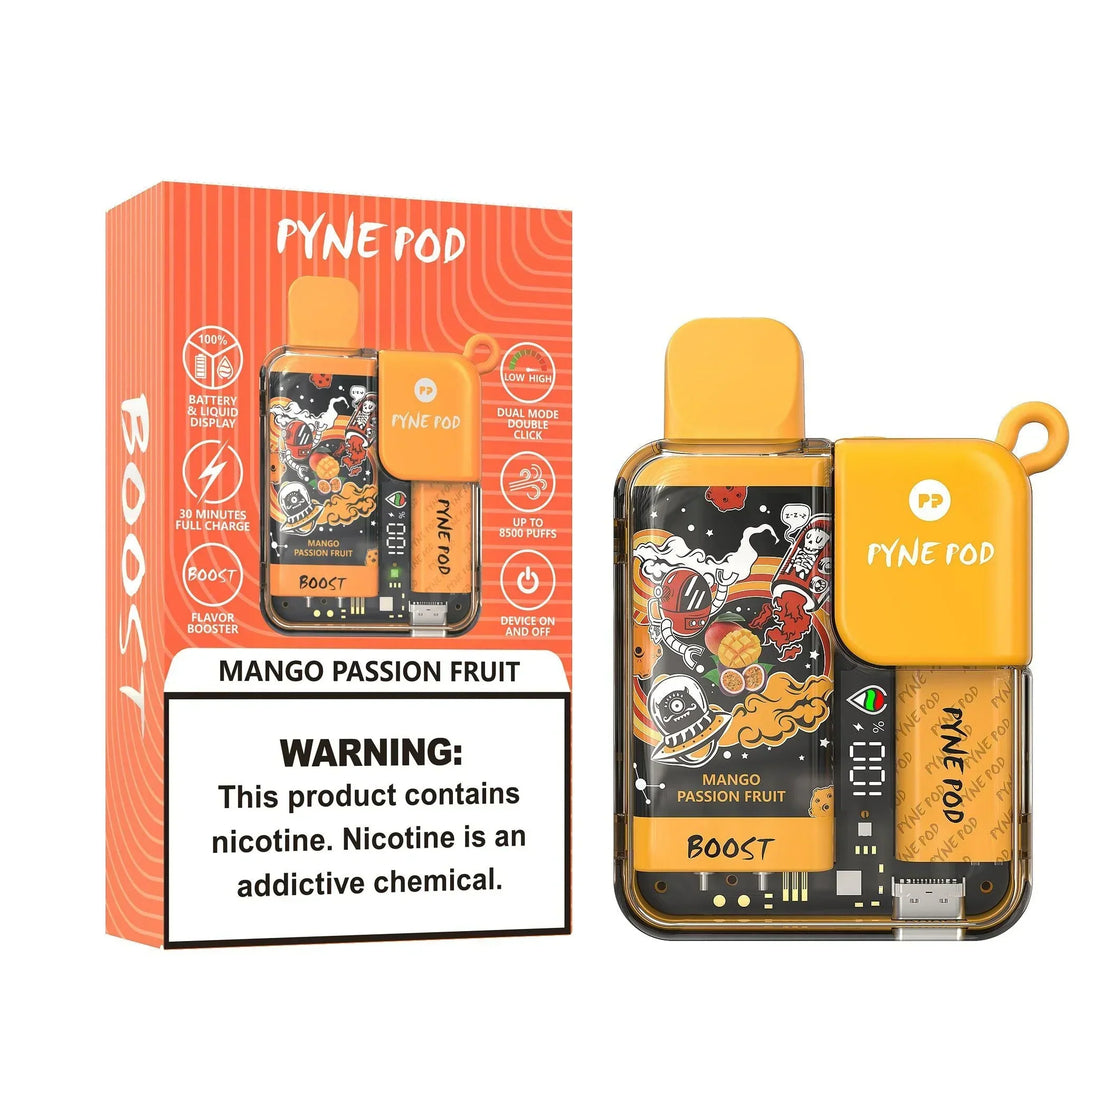 Pyne Pod Boost 8500 Puffs Disposable Vape (Box of 10)